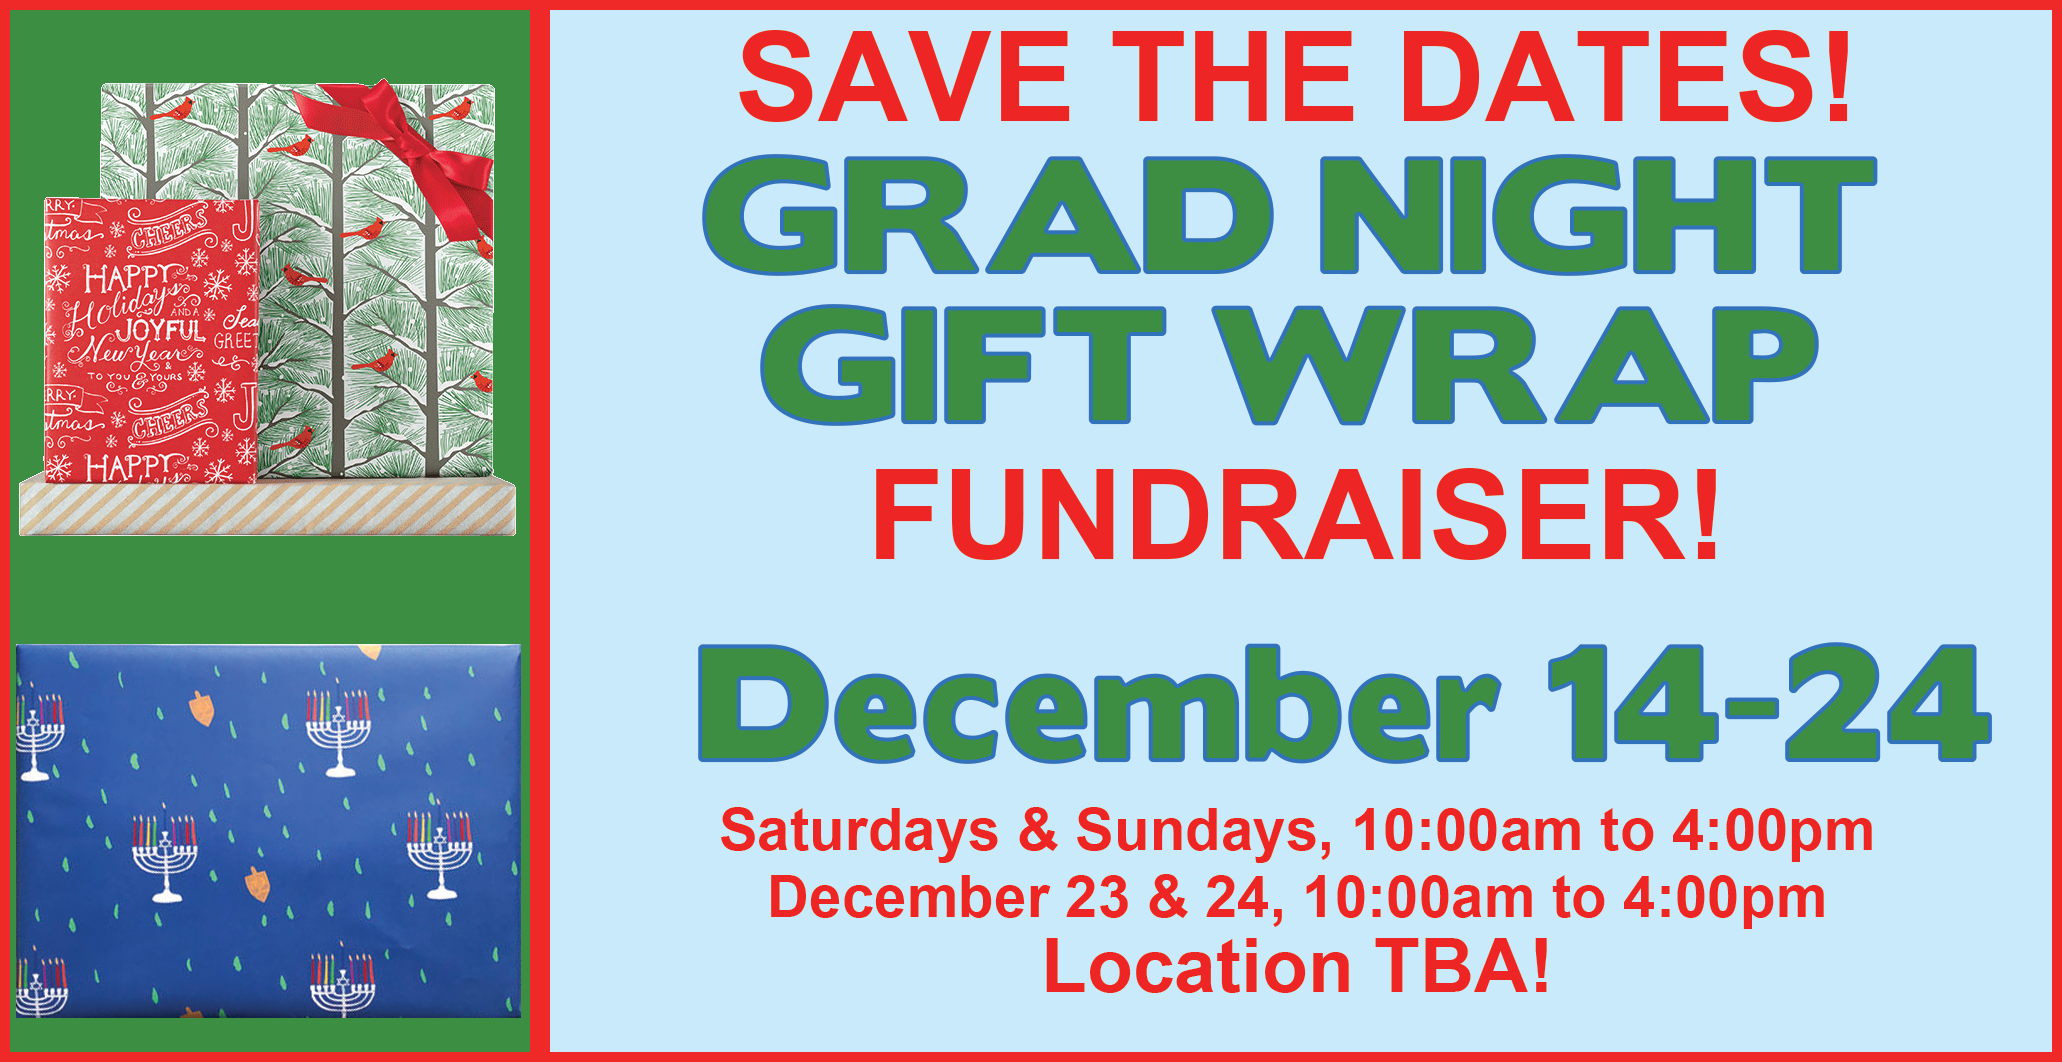 save the dates grad night gift wrap fundraiser Dec 14-24; location TBA